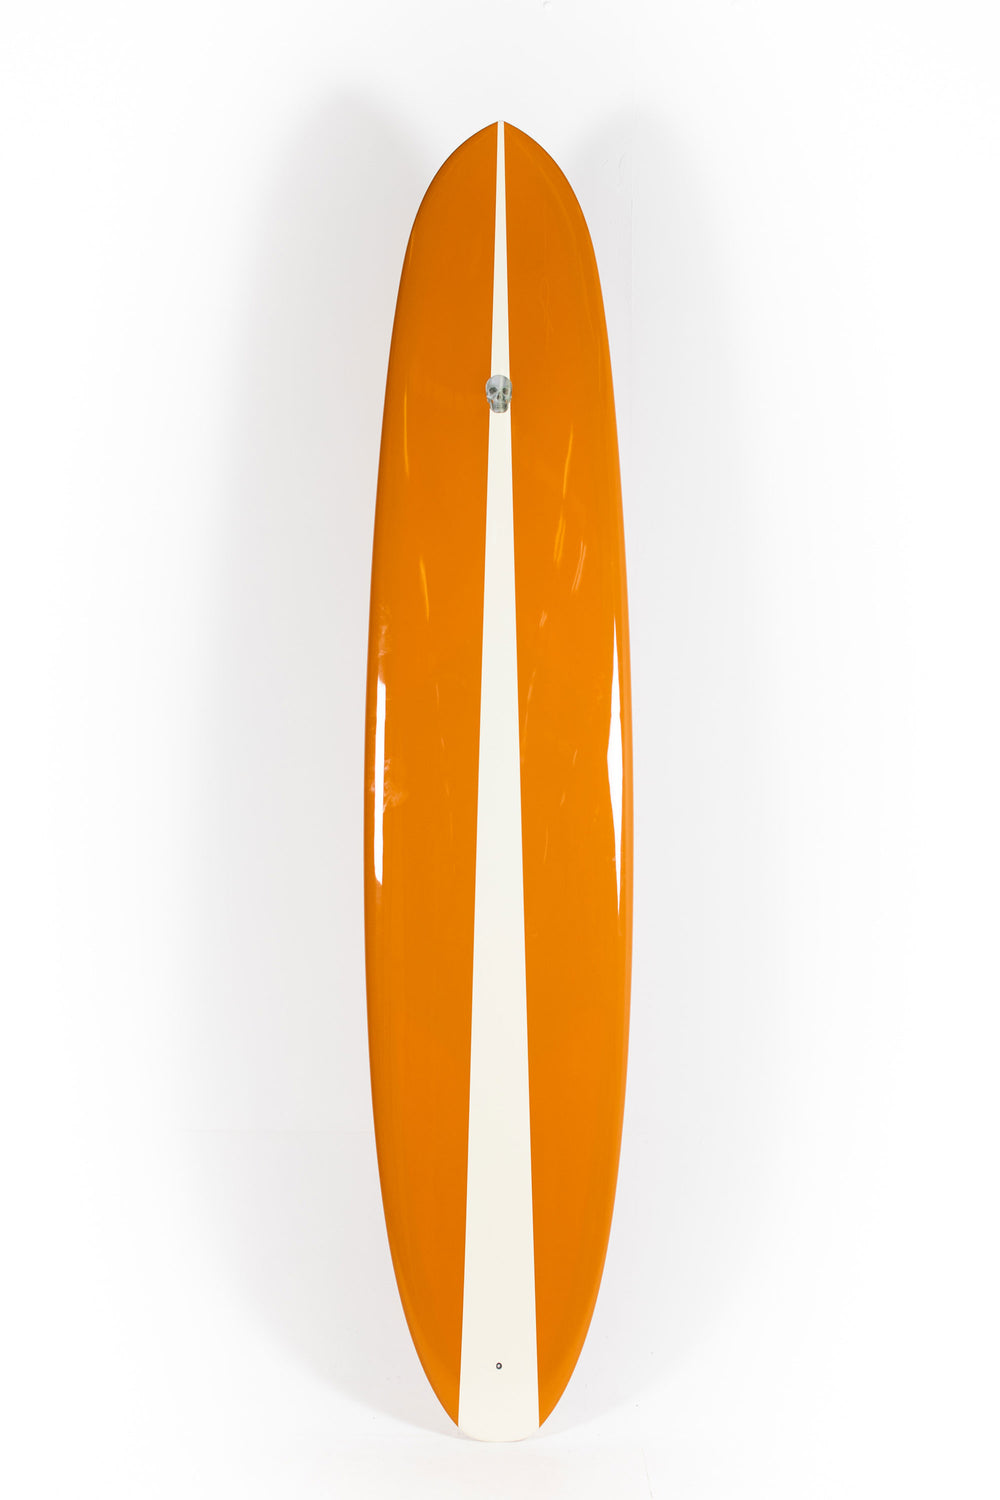 Pukas Surf Shop - Christenson Surfboard  - BANDITO by Chris Christenson - 9'3” x 23 x 2 13/16 - CX03427